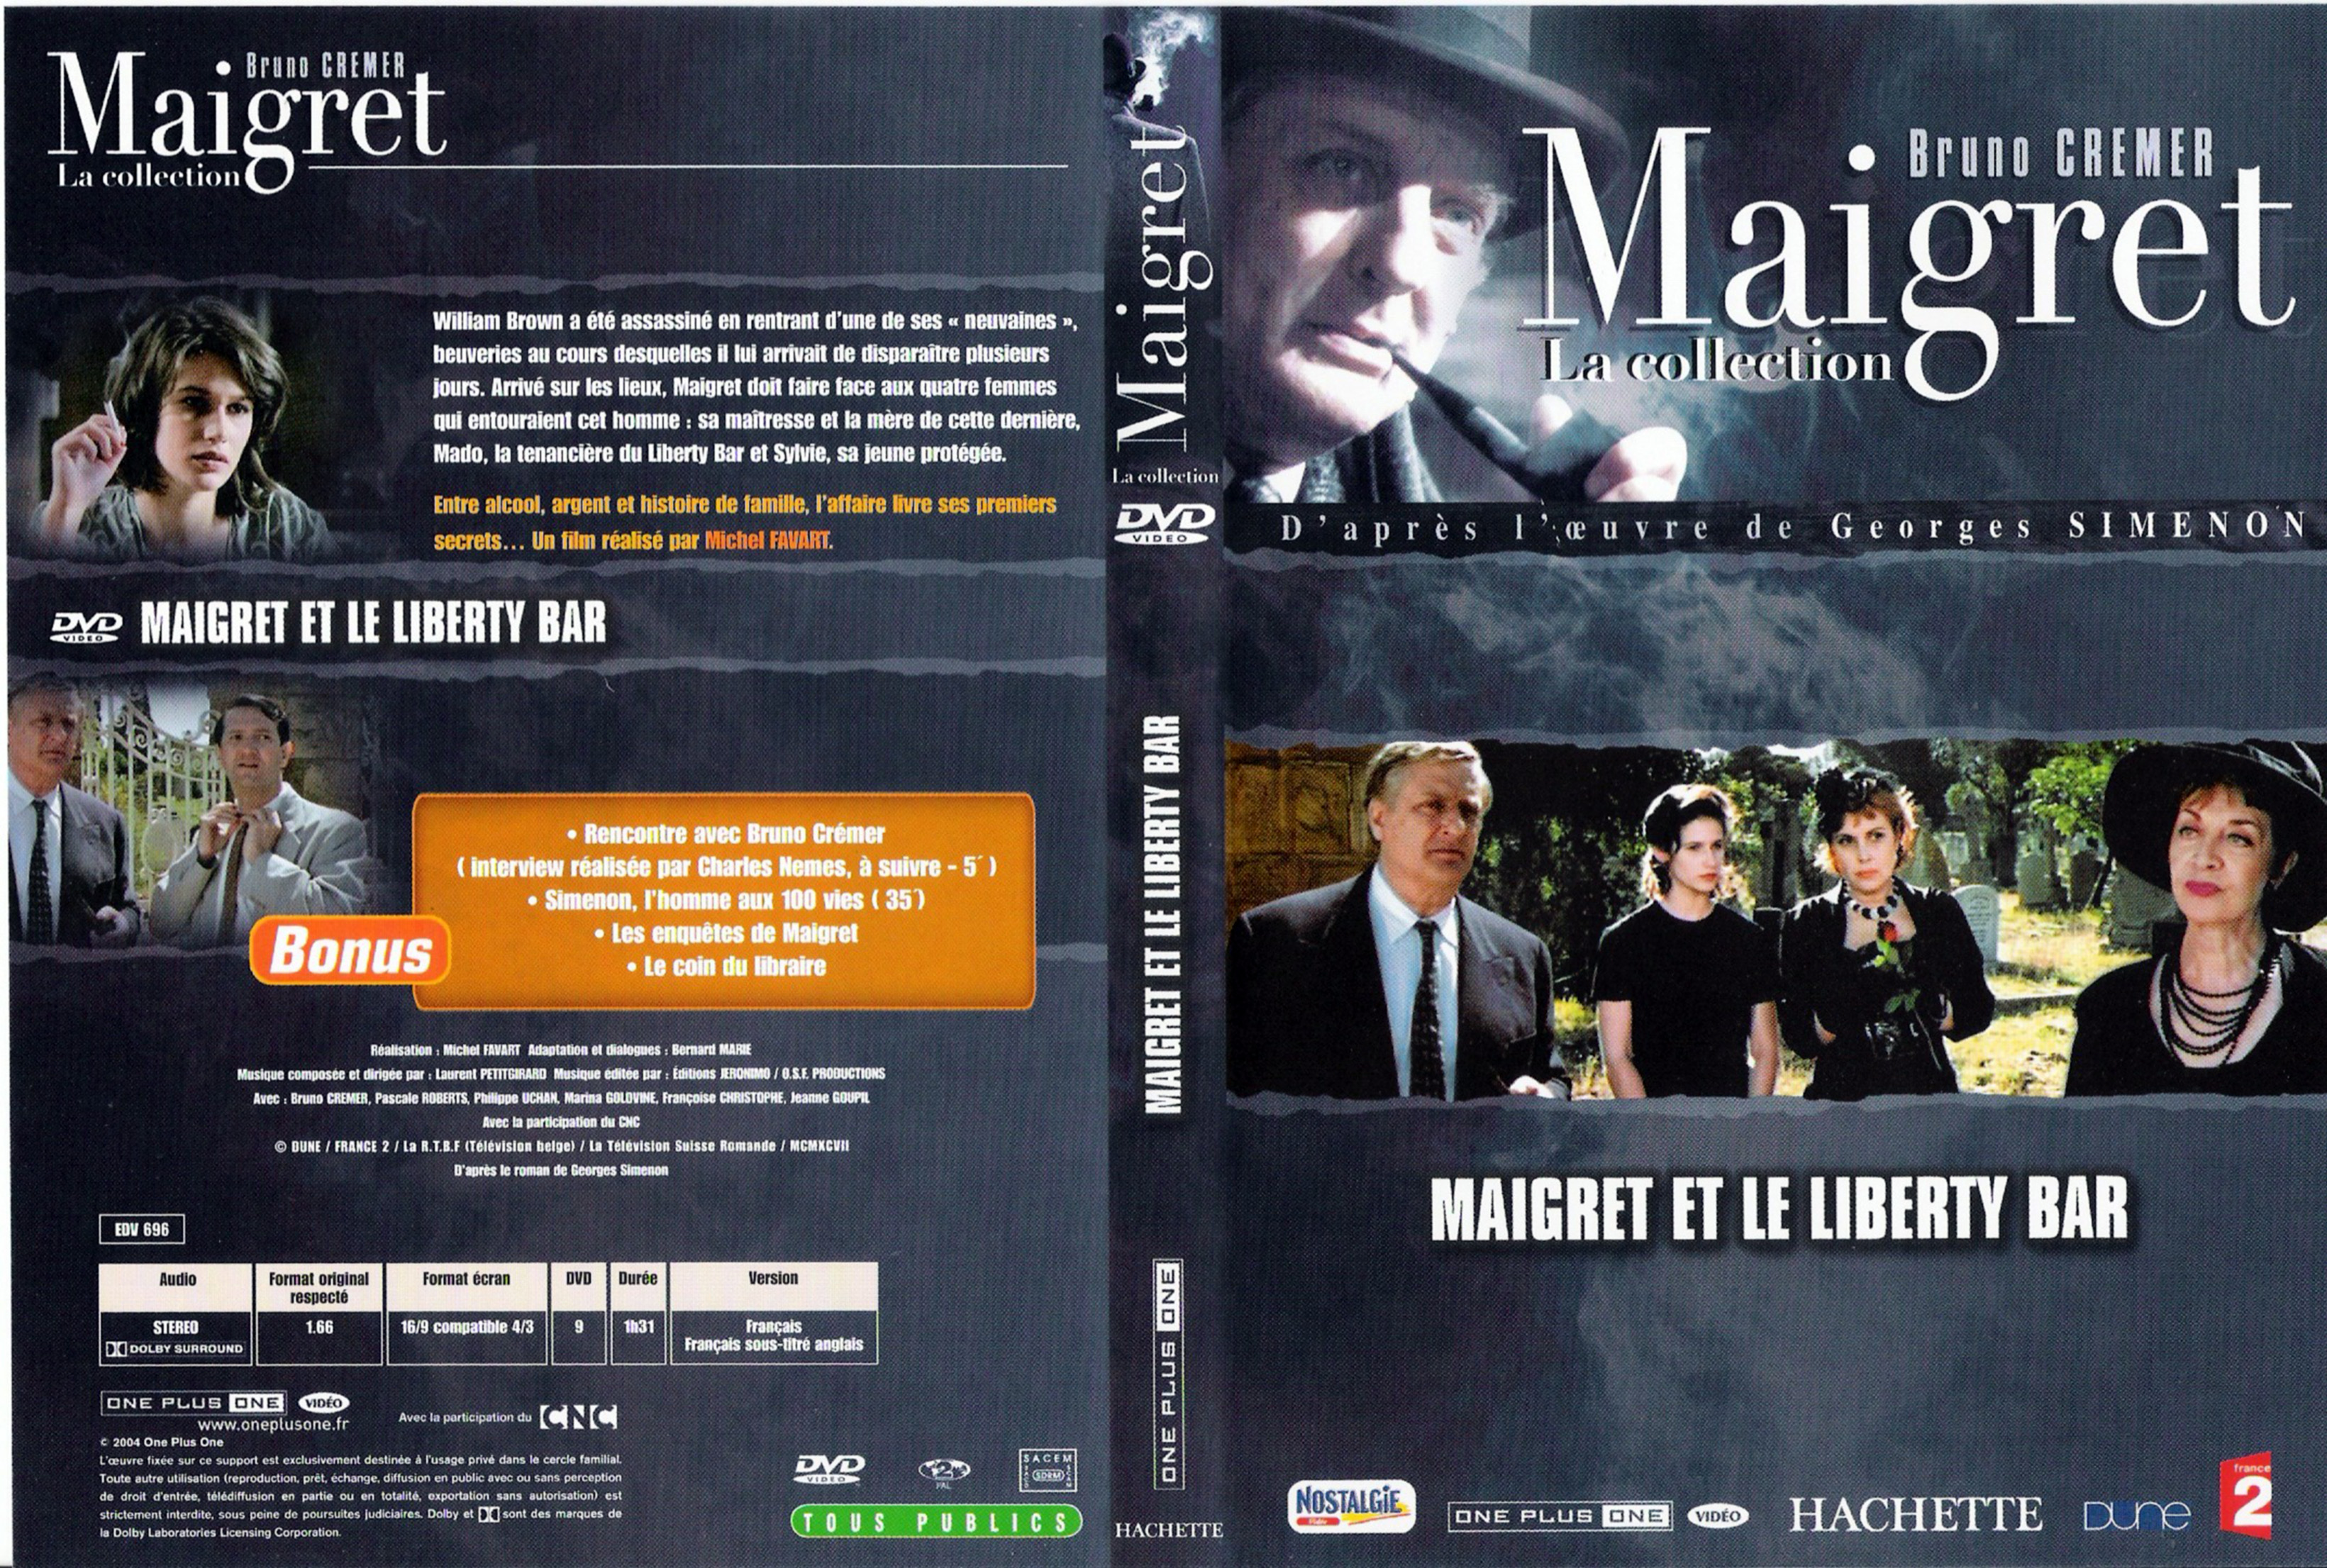 Jaquette DVD Maigret et le Liberty Bar (Bruno Cremer)